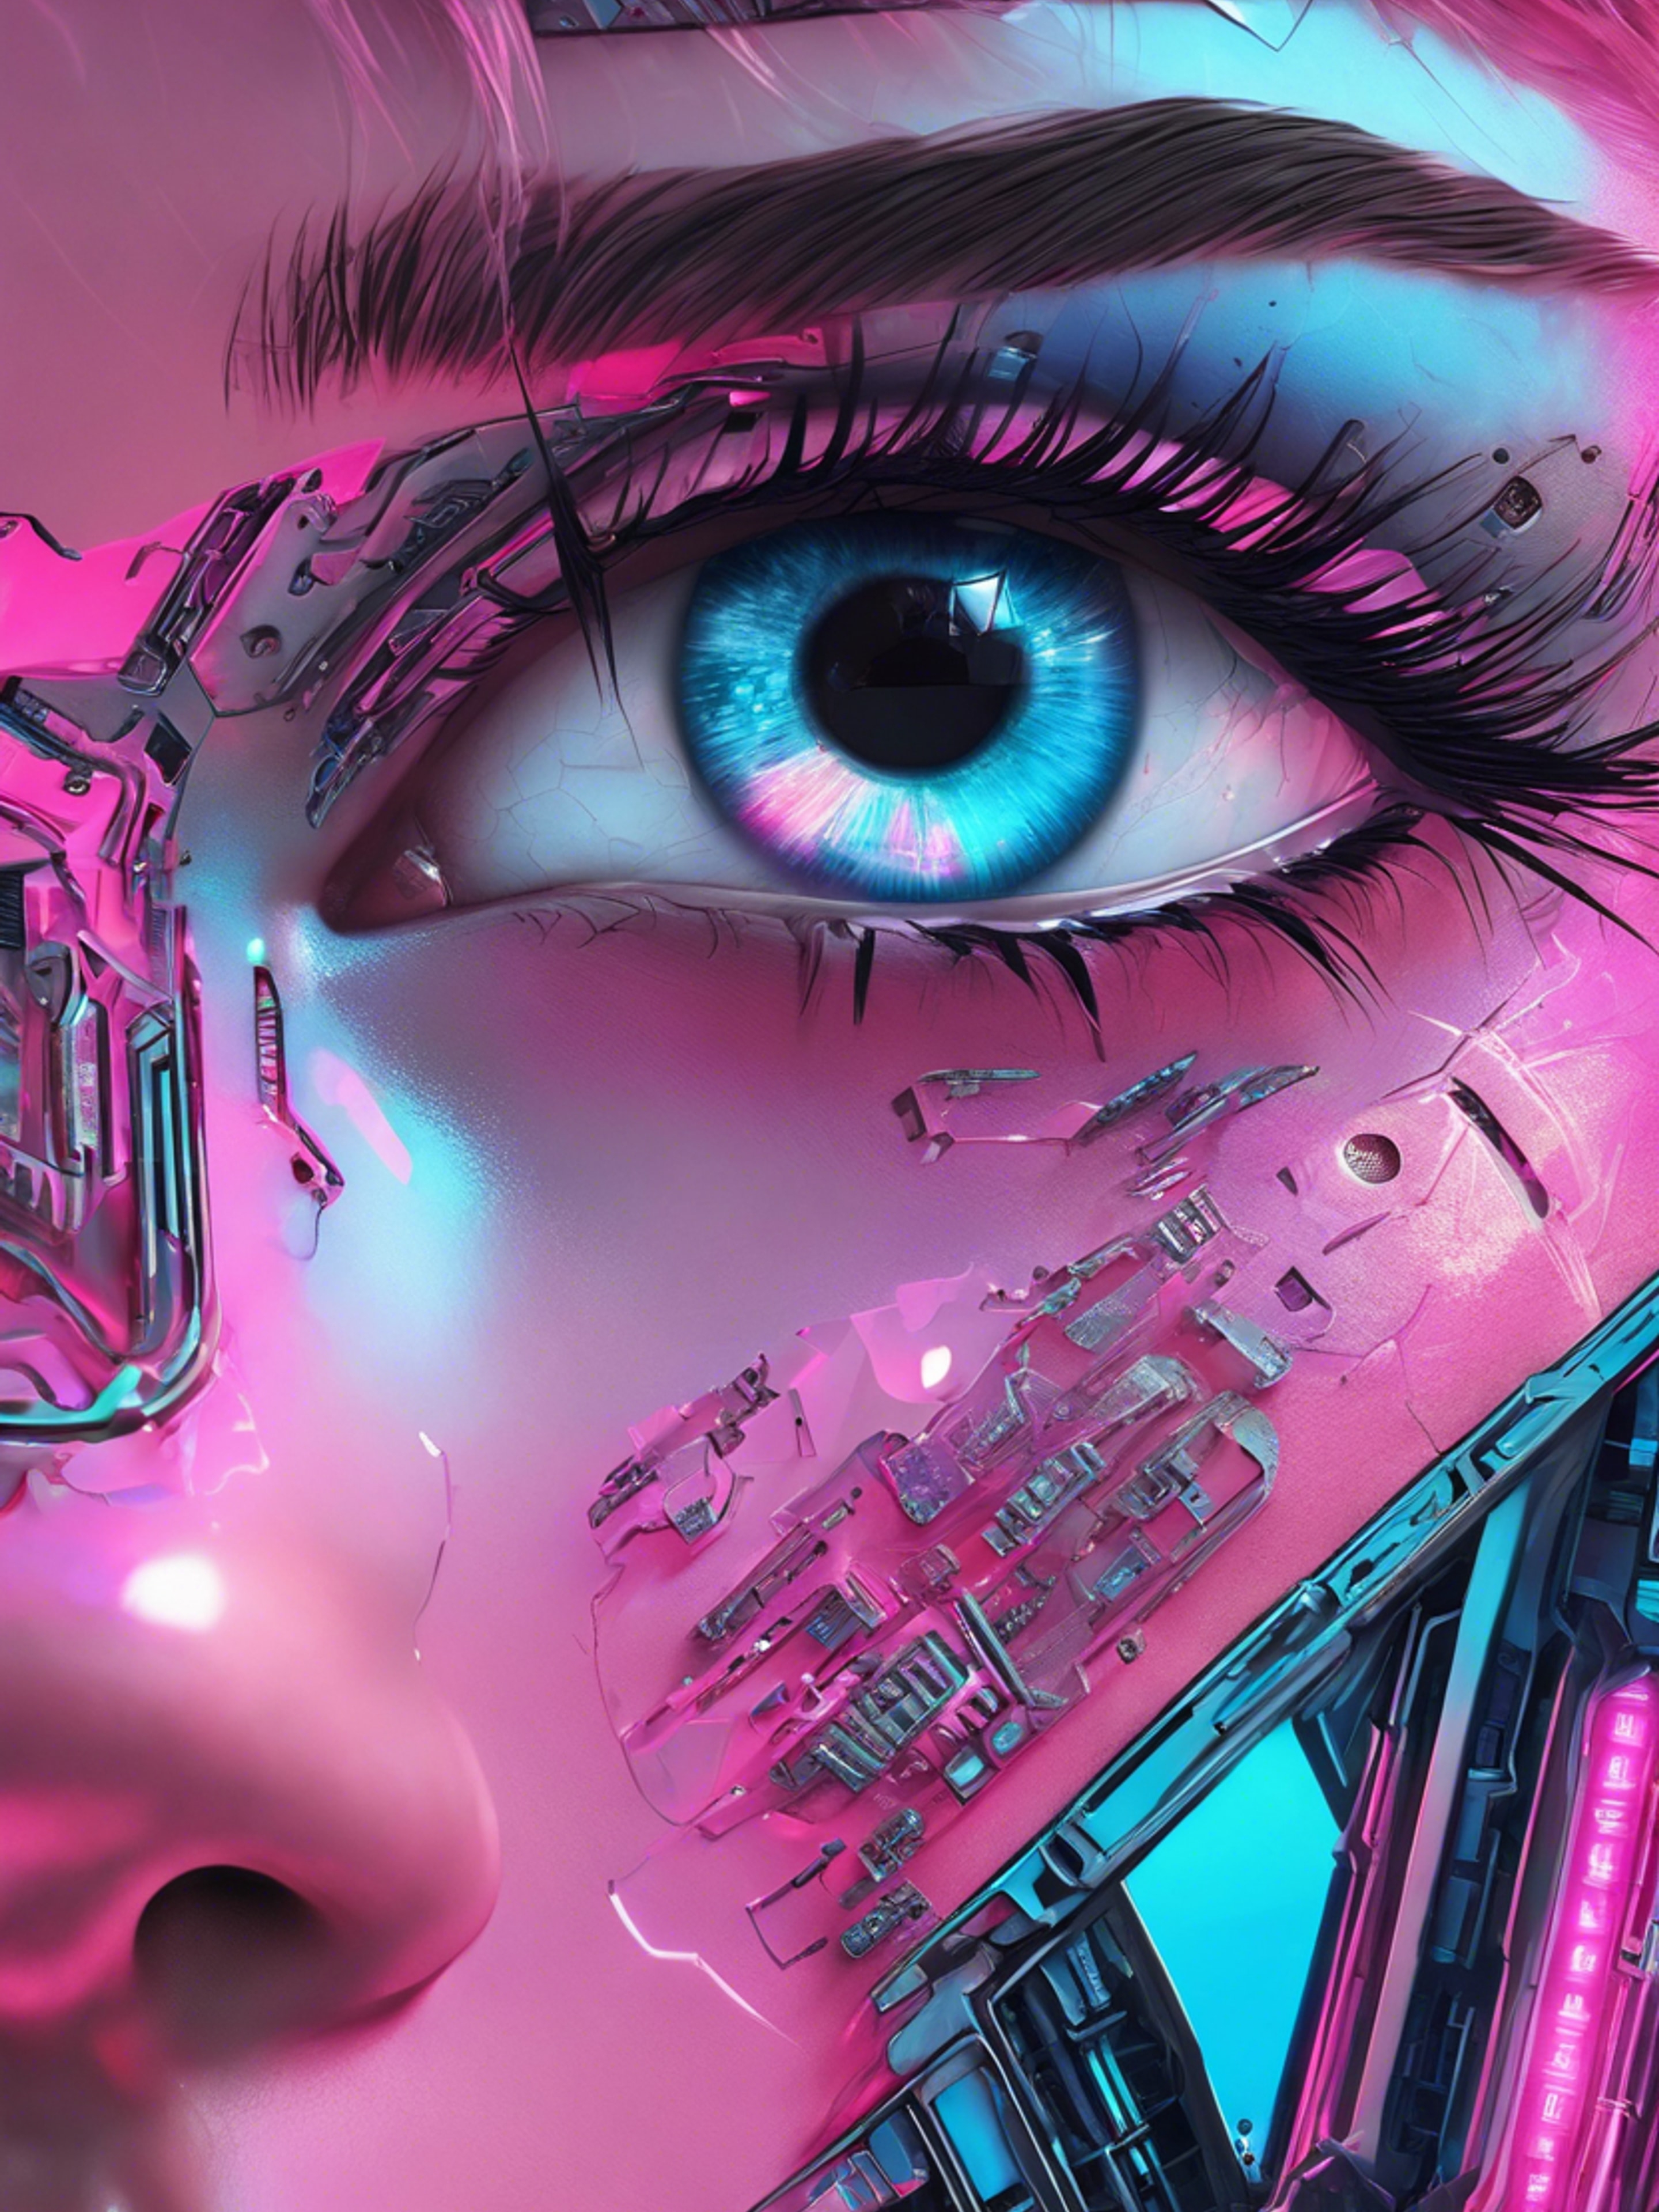 A close-up of a cyberpunk girl's eye, reflecting pink and blue city lights. Tapeta na zeď[805009a14d1a4c10afac]